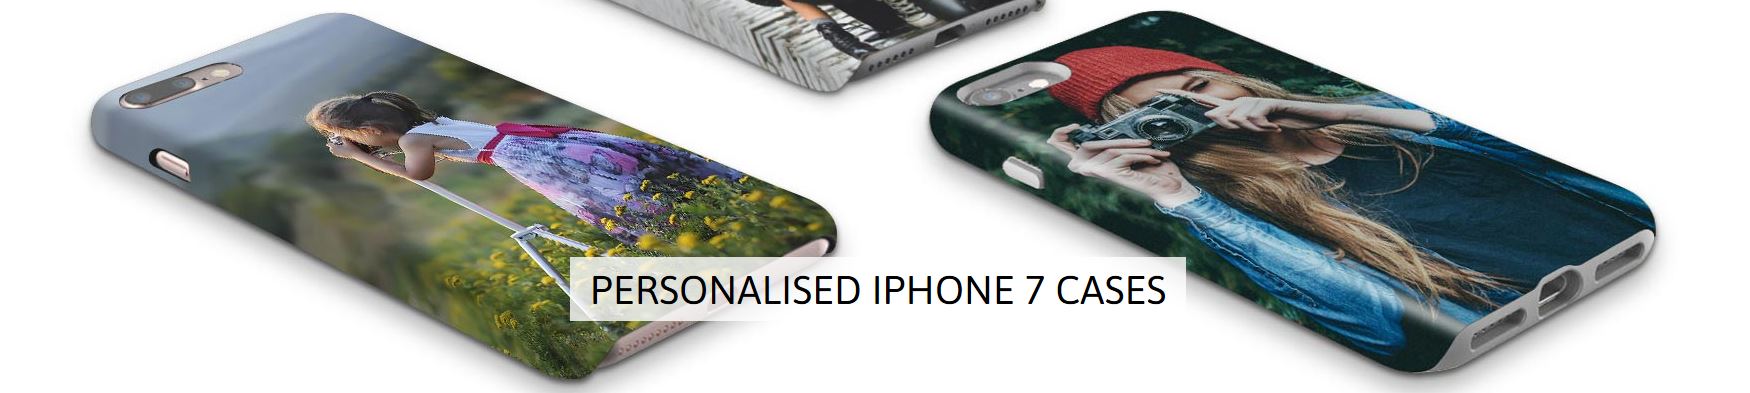 Customised iPhone 7 cases